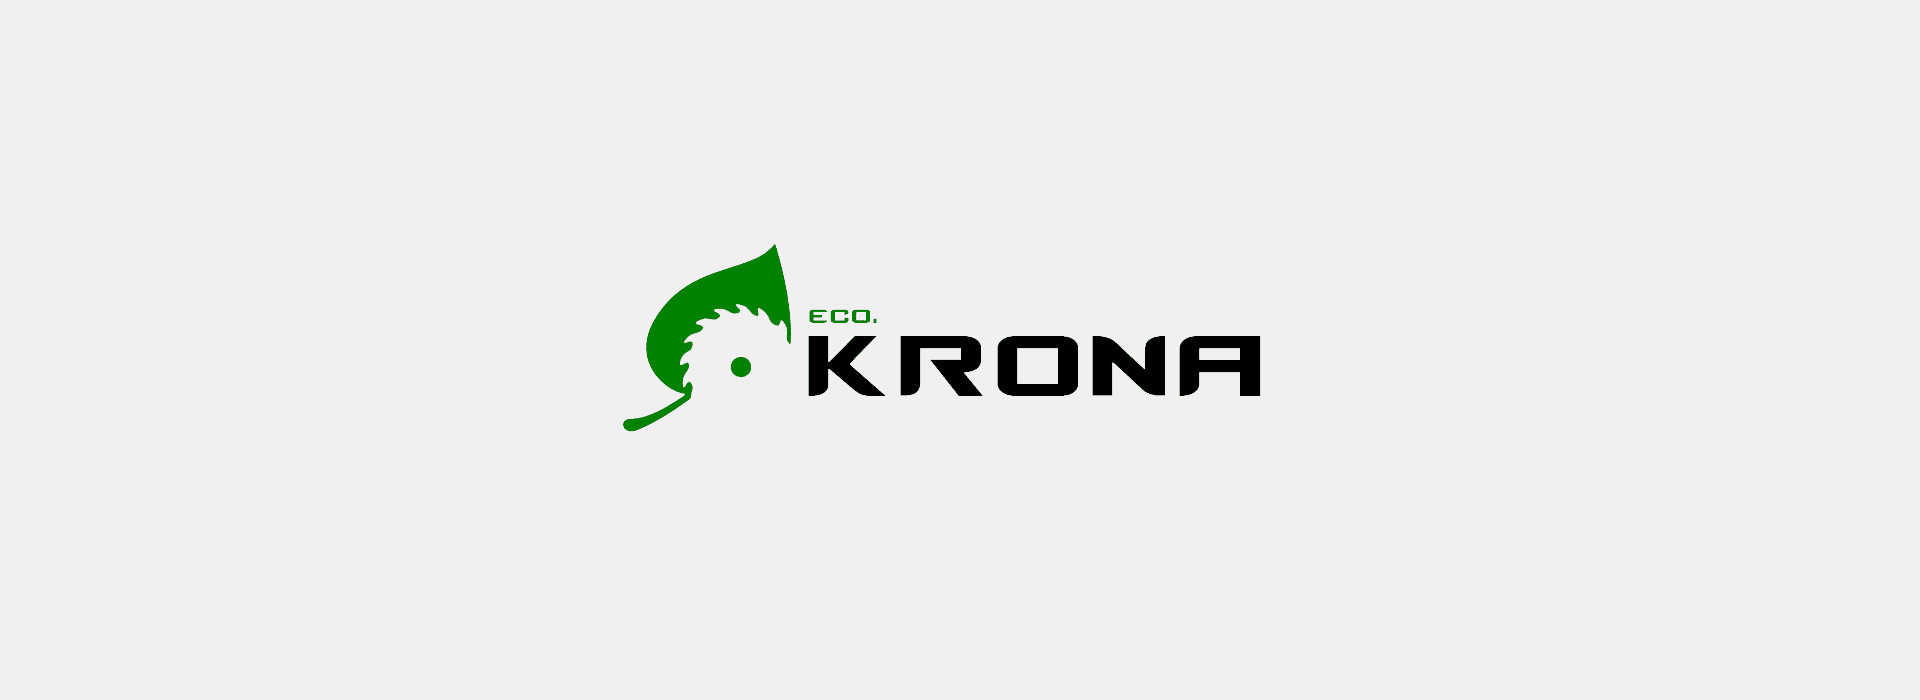 Krona Logotype